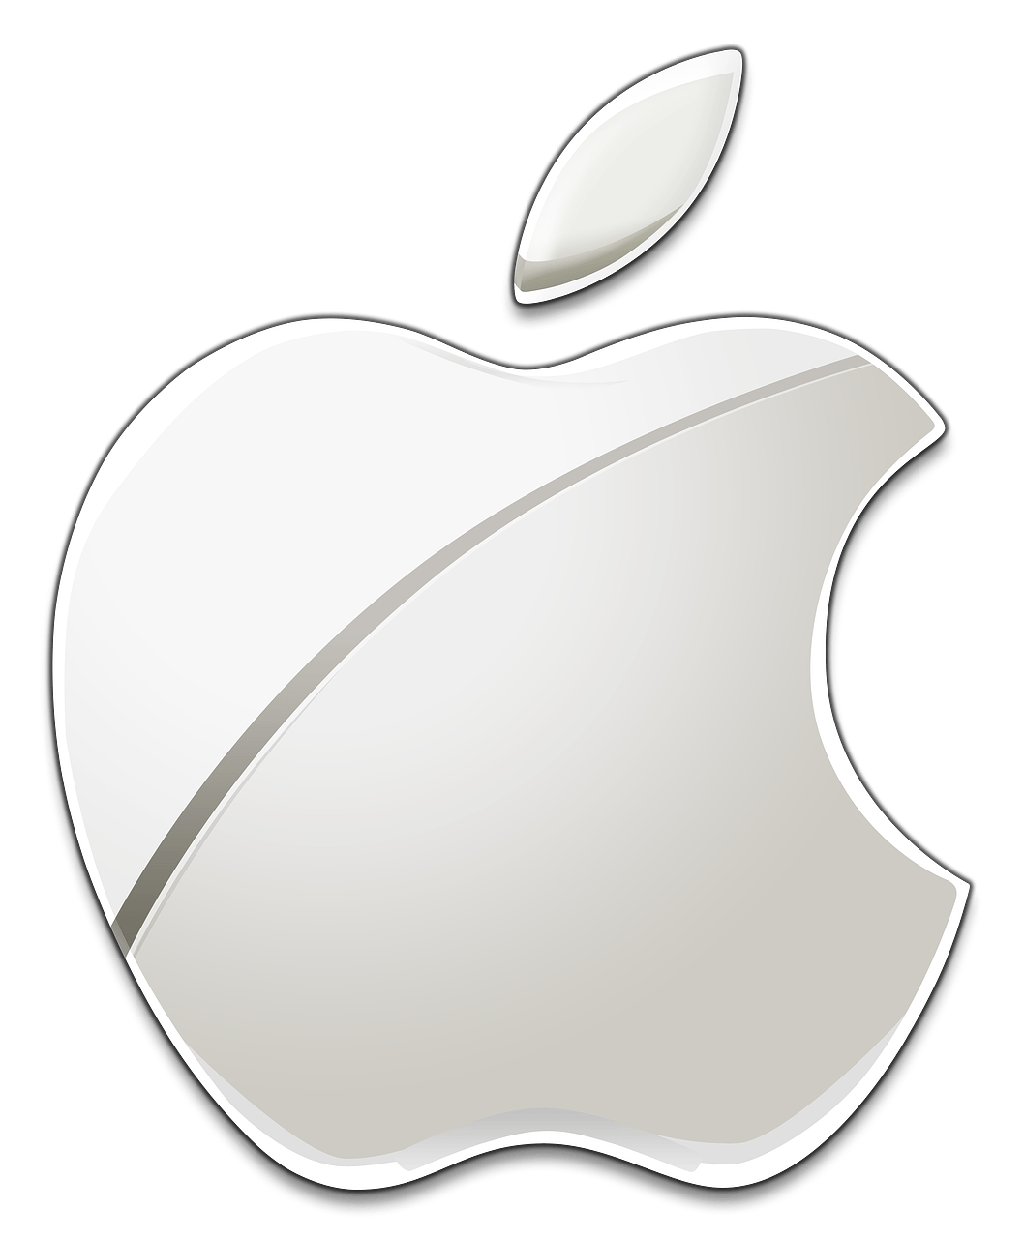 White Transparent Apple Logo - Apple logo PNG images free download